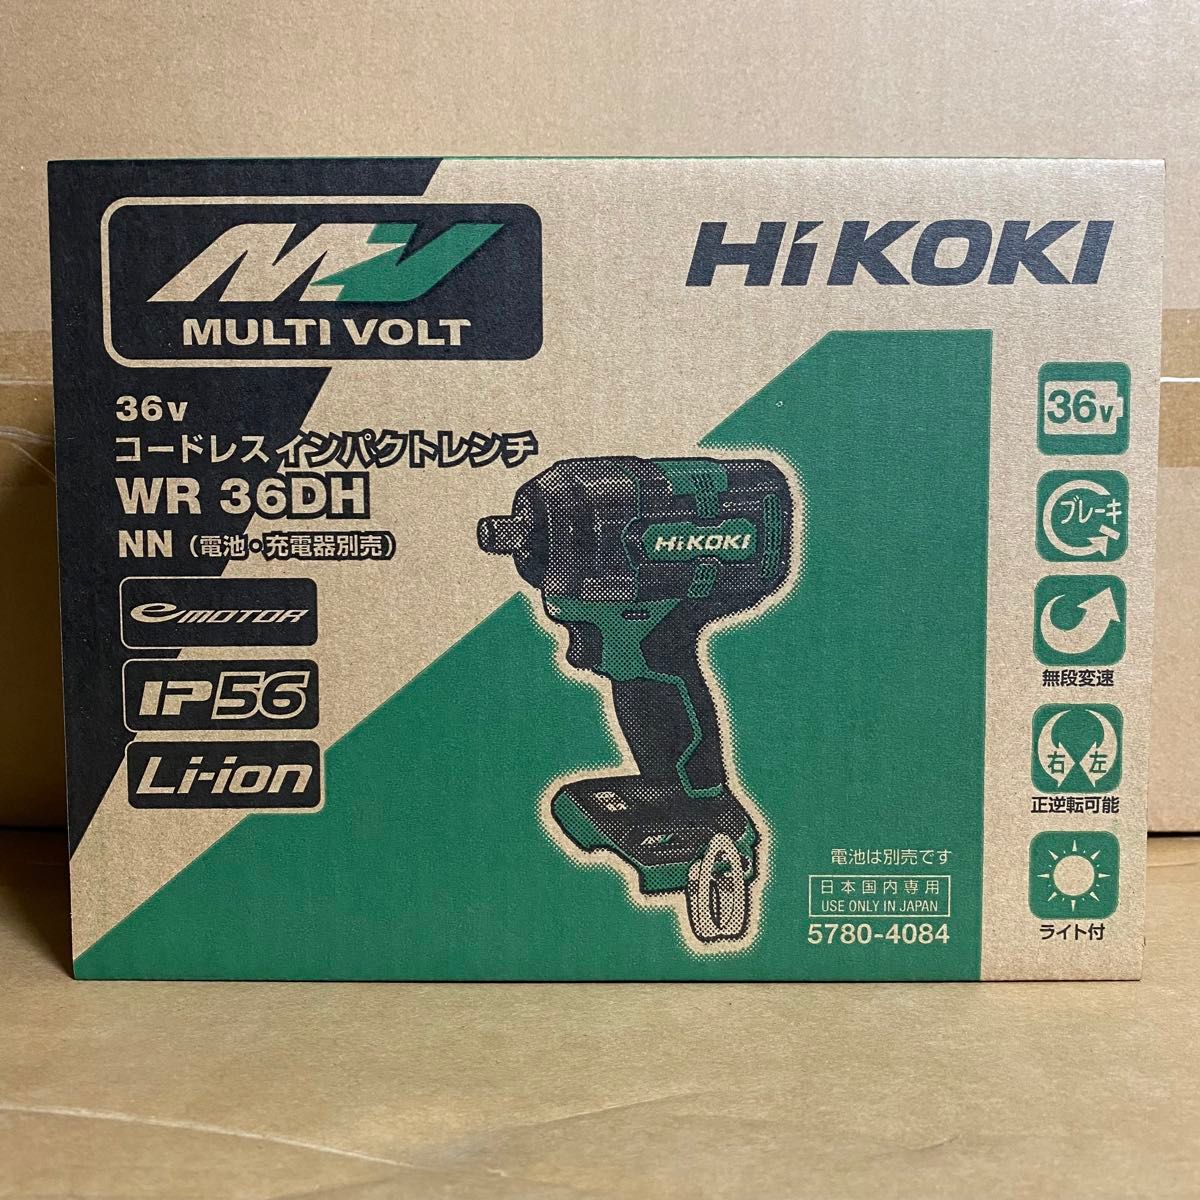 HiKOKI 36Vコードレスインパクトレンチ WR36DH (NN) 本体のみ(バッテリー・充電器別売)